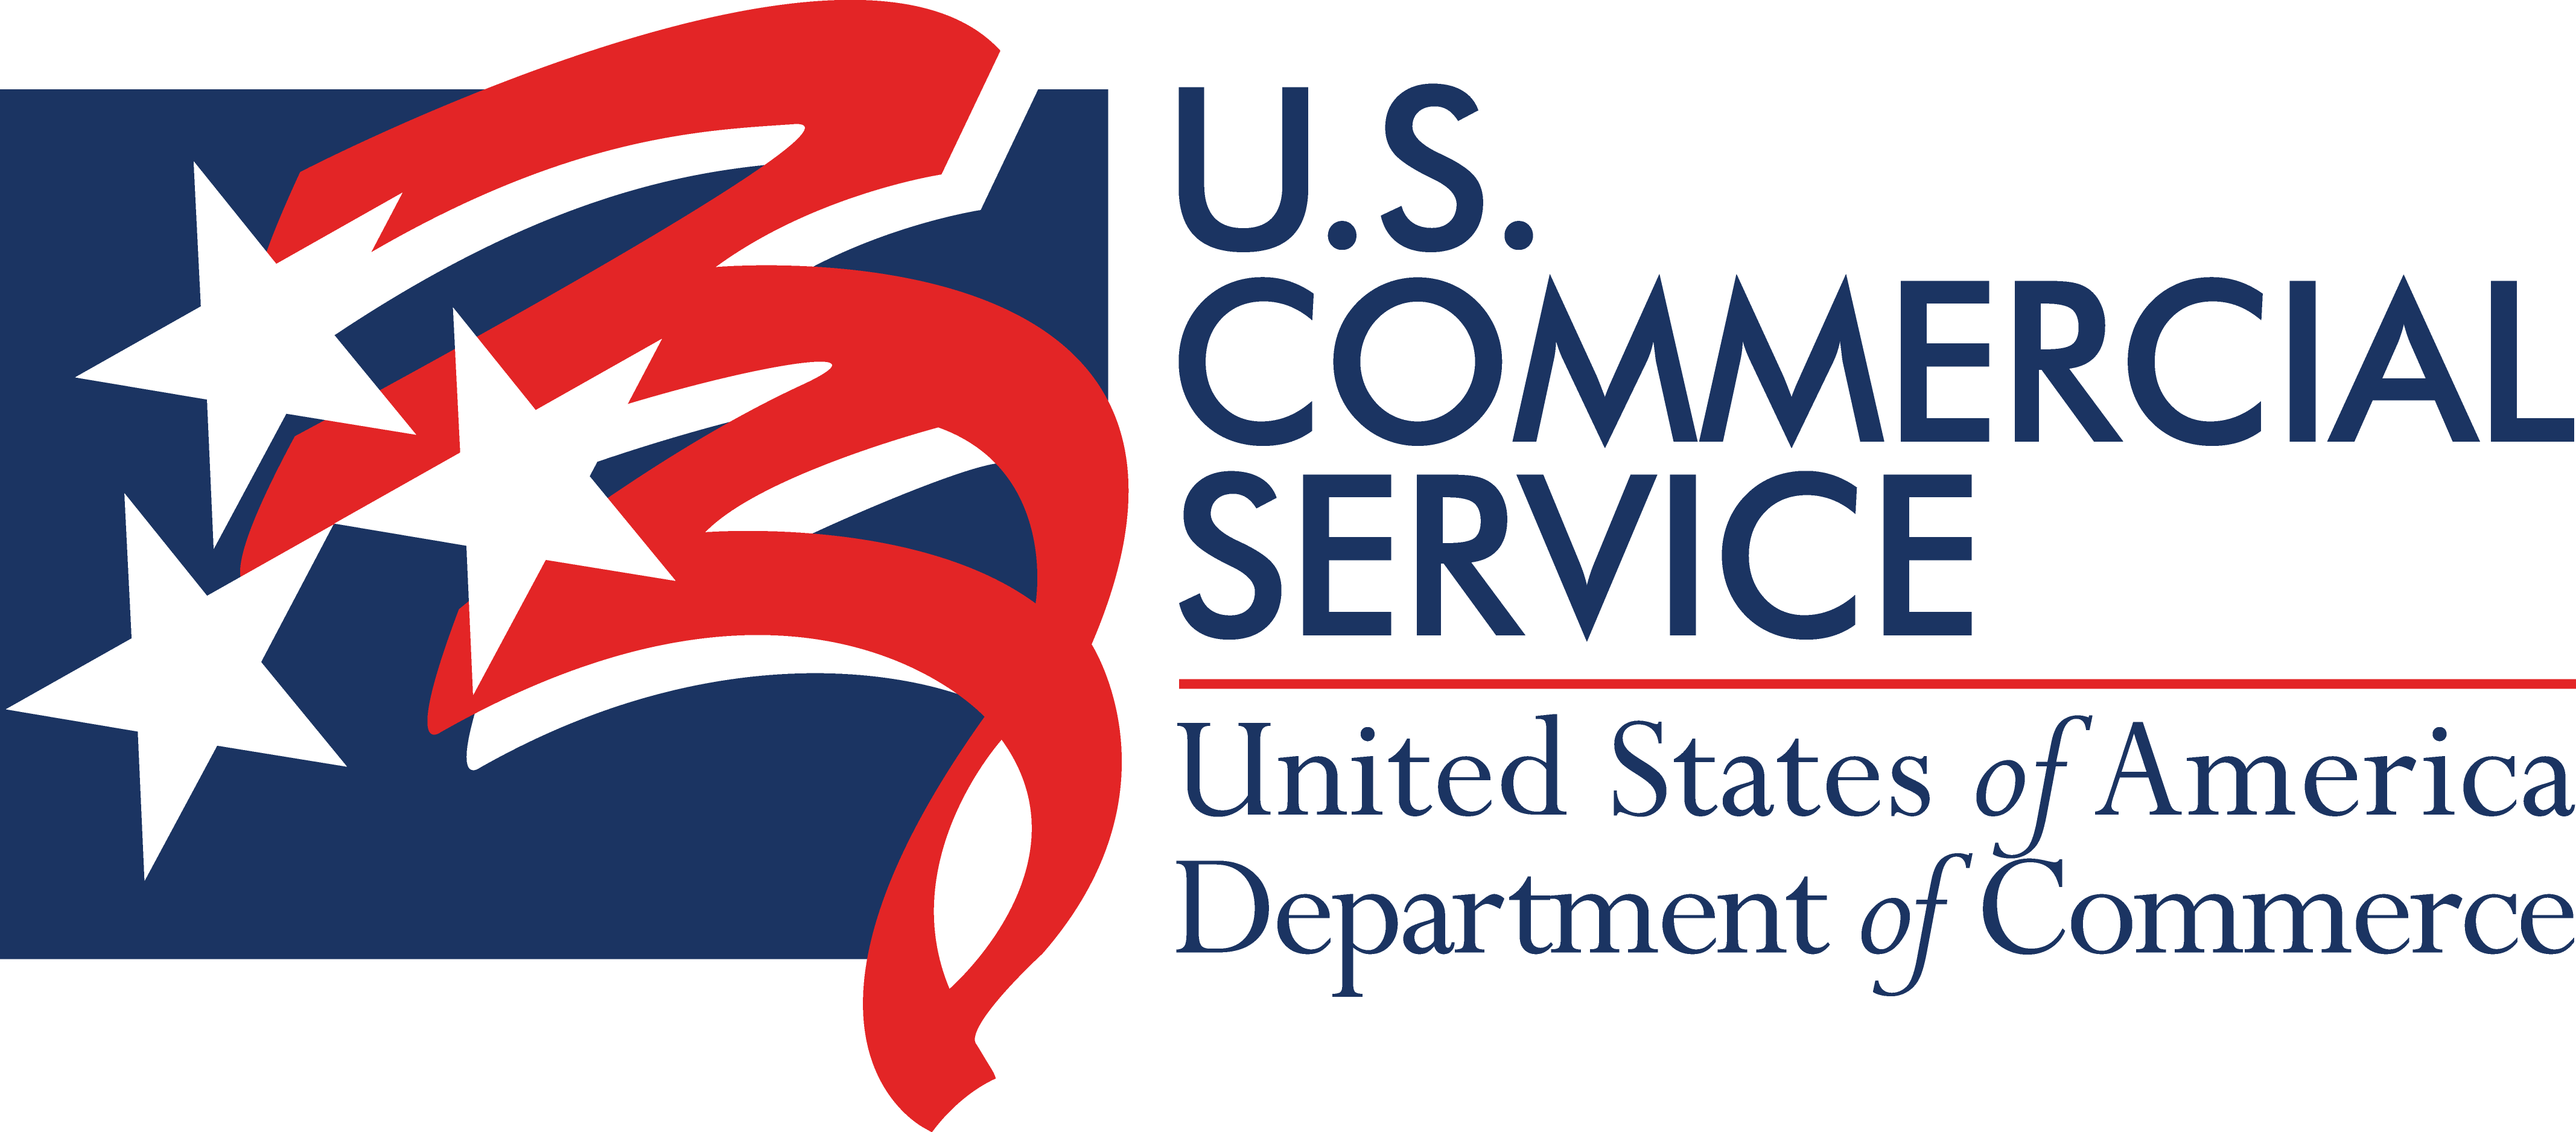 Commerce Dept. Commercial Service logo